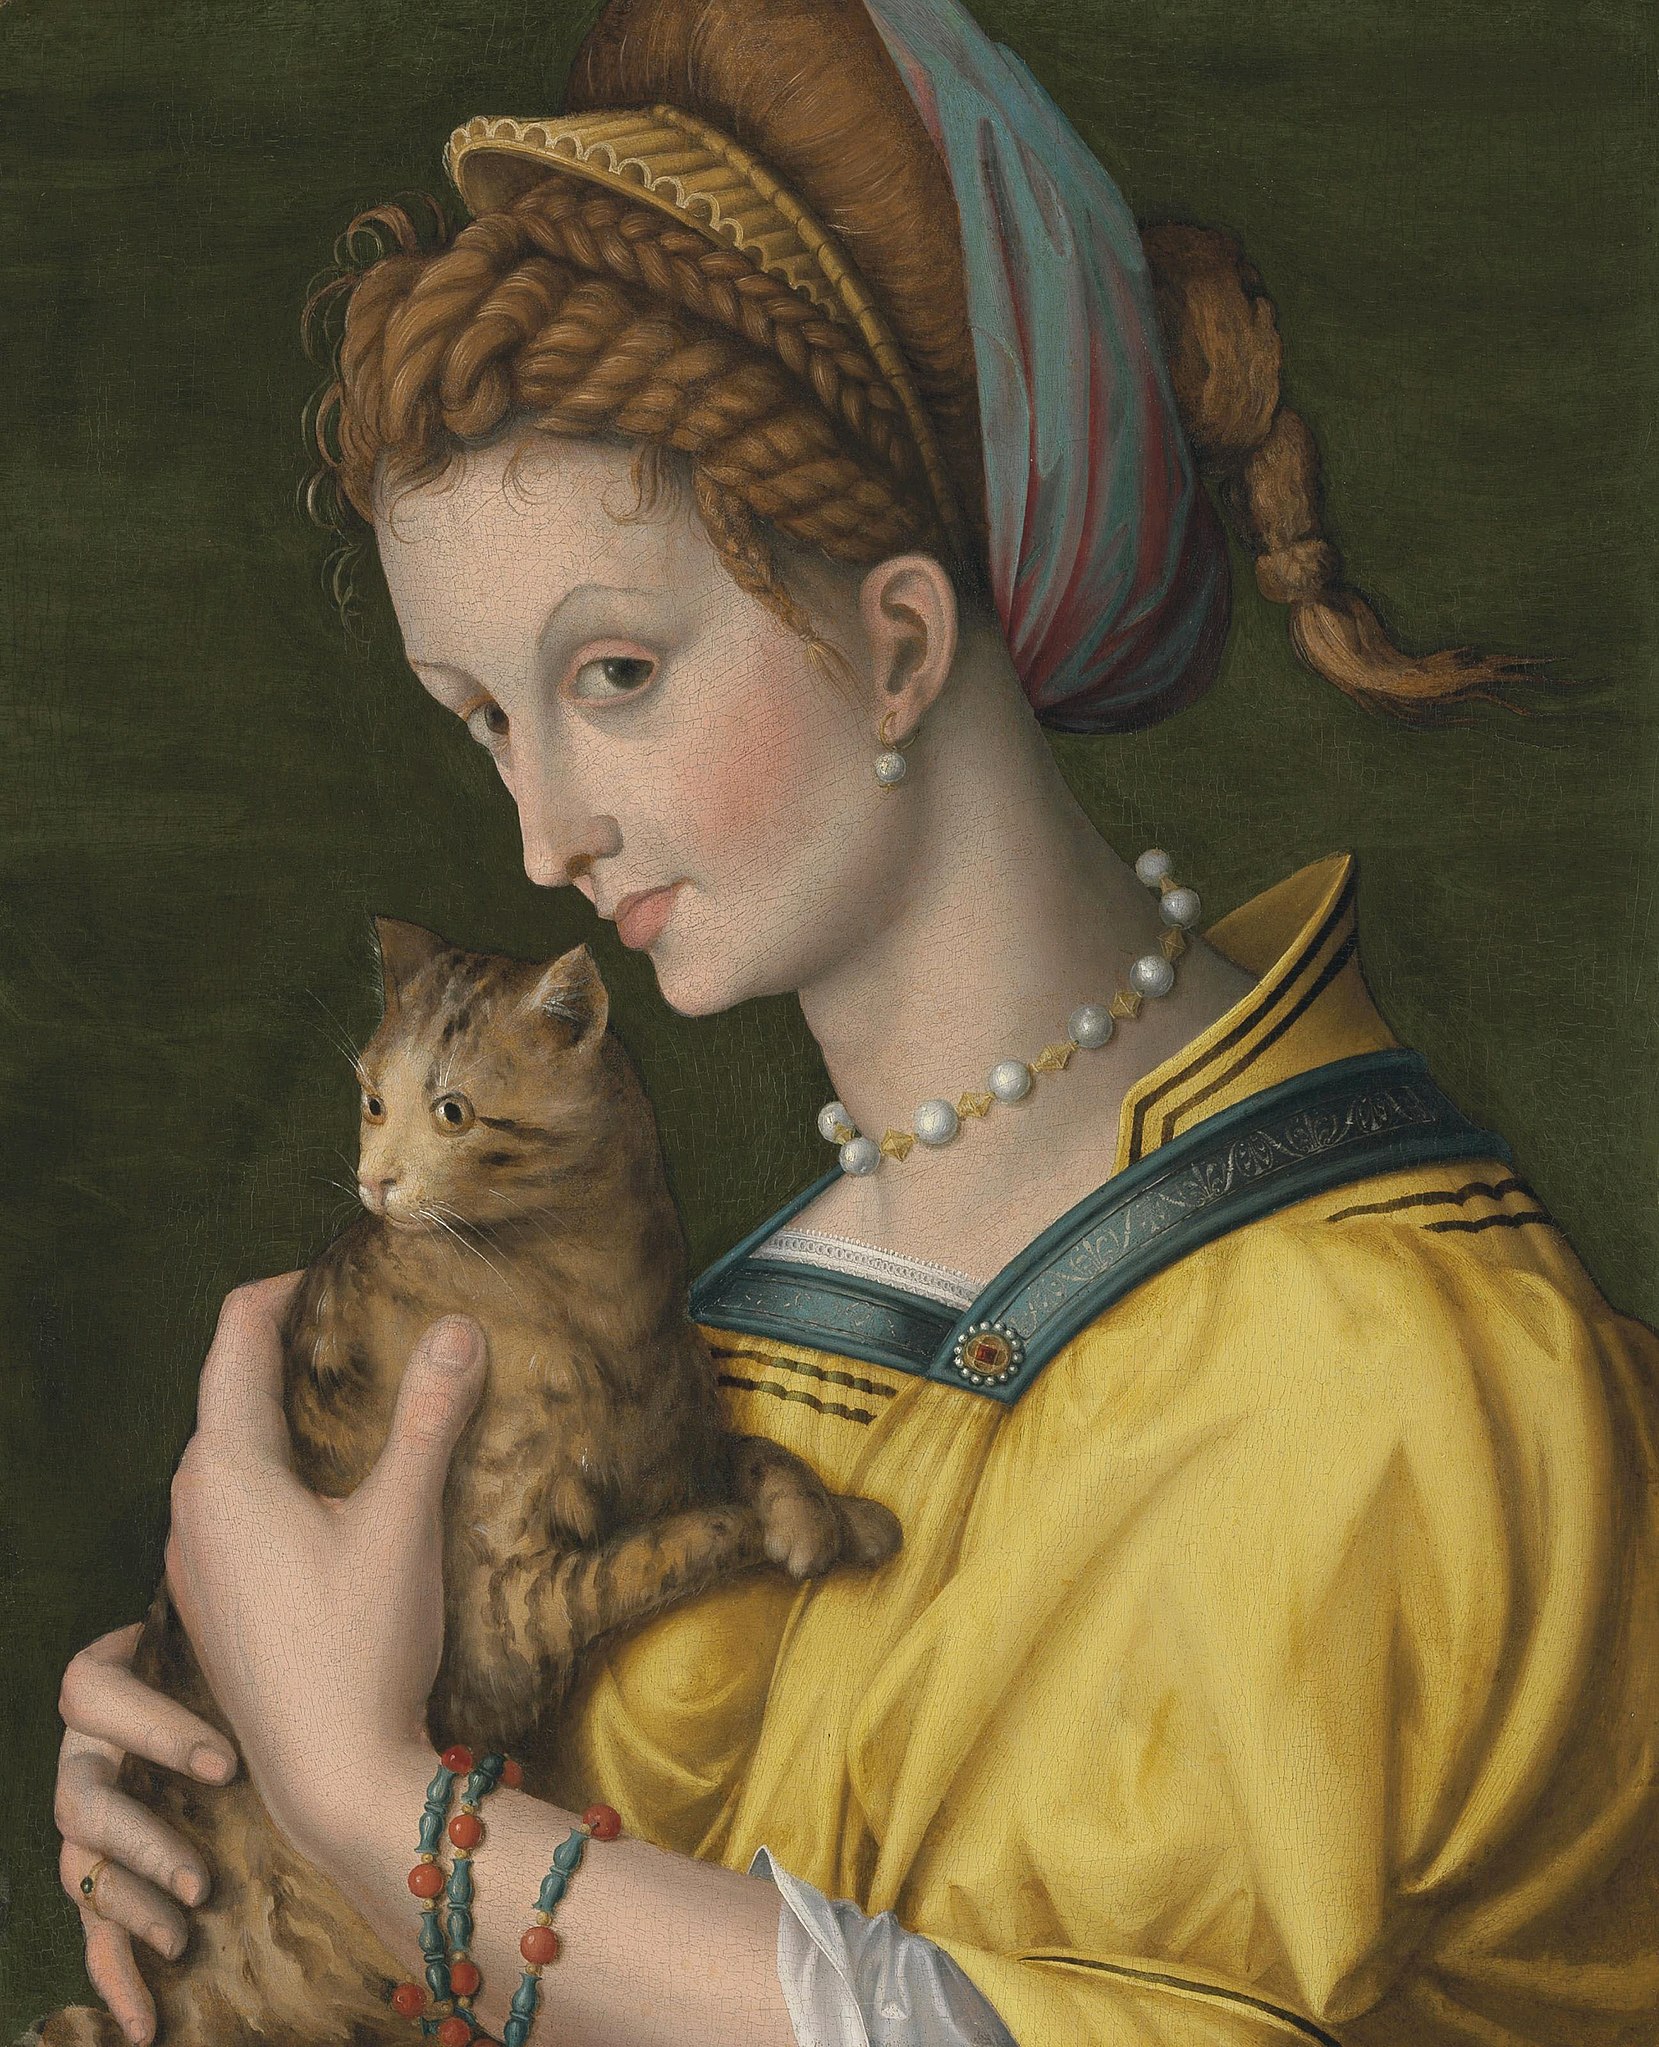 Macskát tartó fiatal hölgy arcképe by Antonio d'Ubertino Verdi, called Bachiacca - 1525-1530 körül - 53,6 x 43,8 cm 